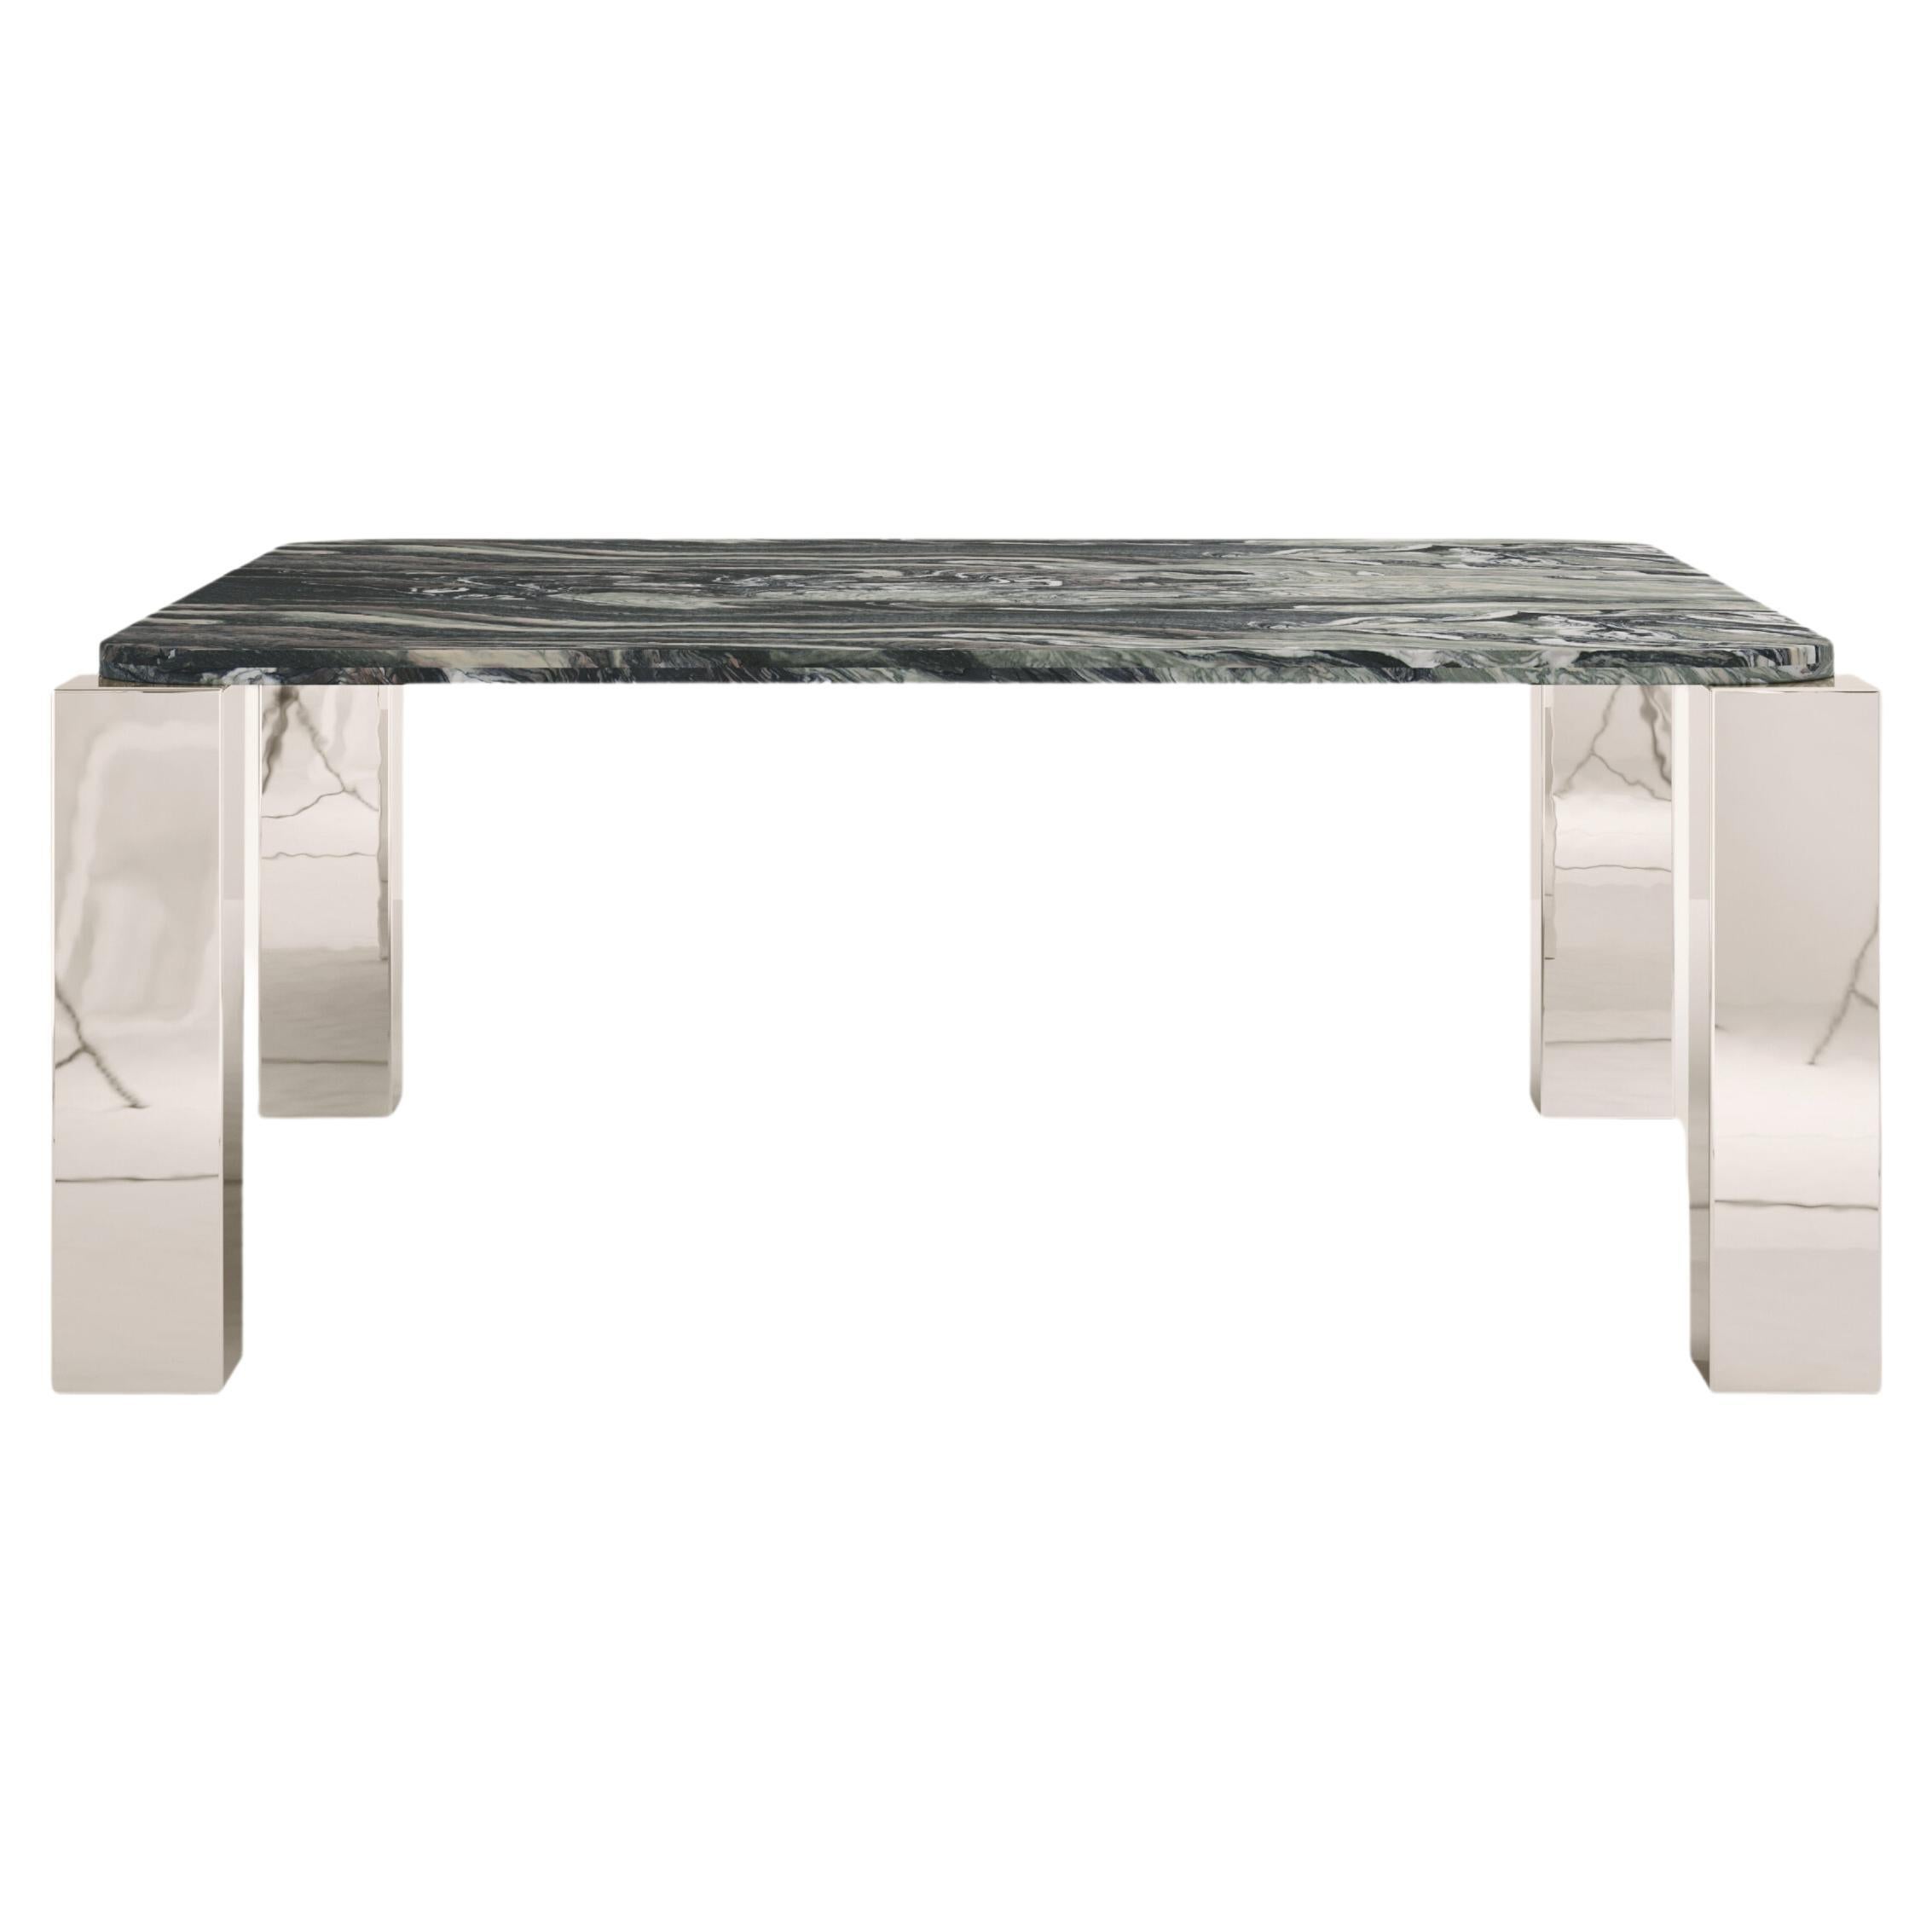 FORM(LA) Cubo Square Dining Table 74”L x 74”W x 30”H Ondulato Marble & Chrome  For Sale